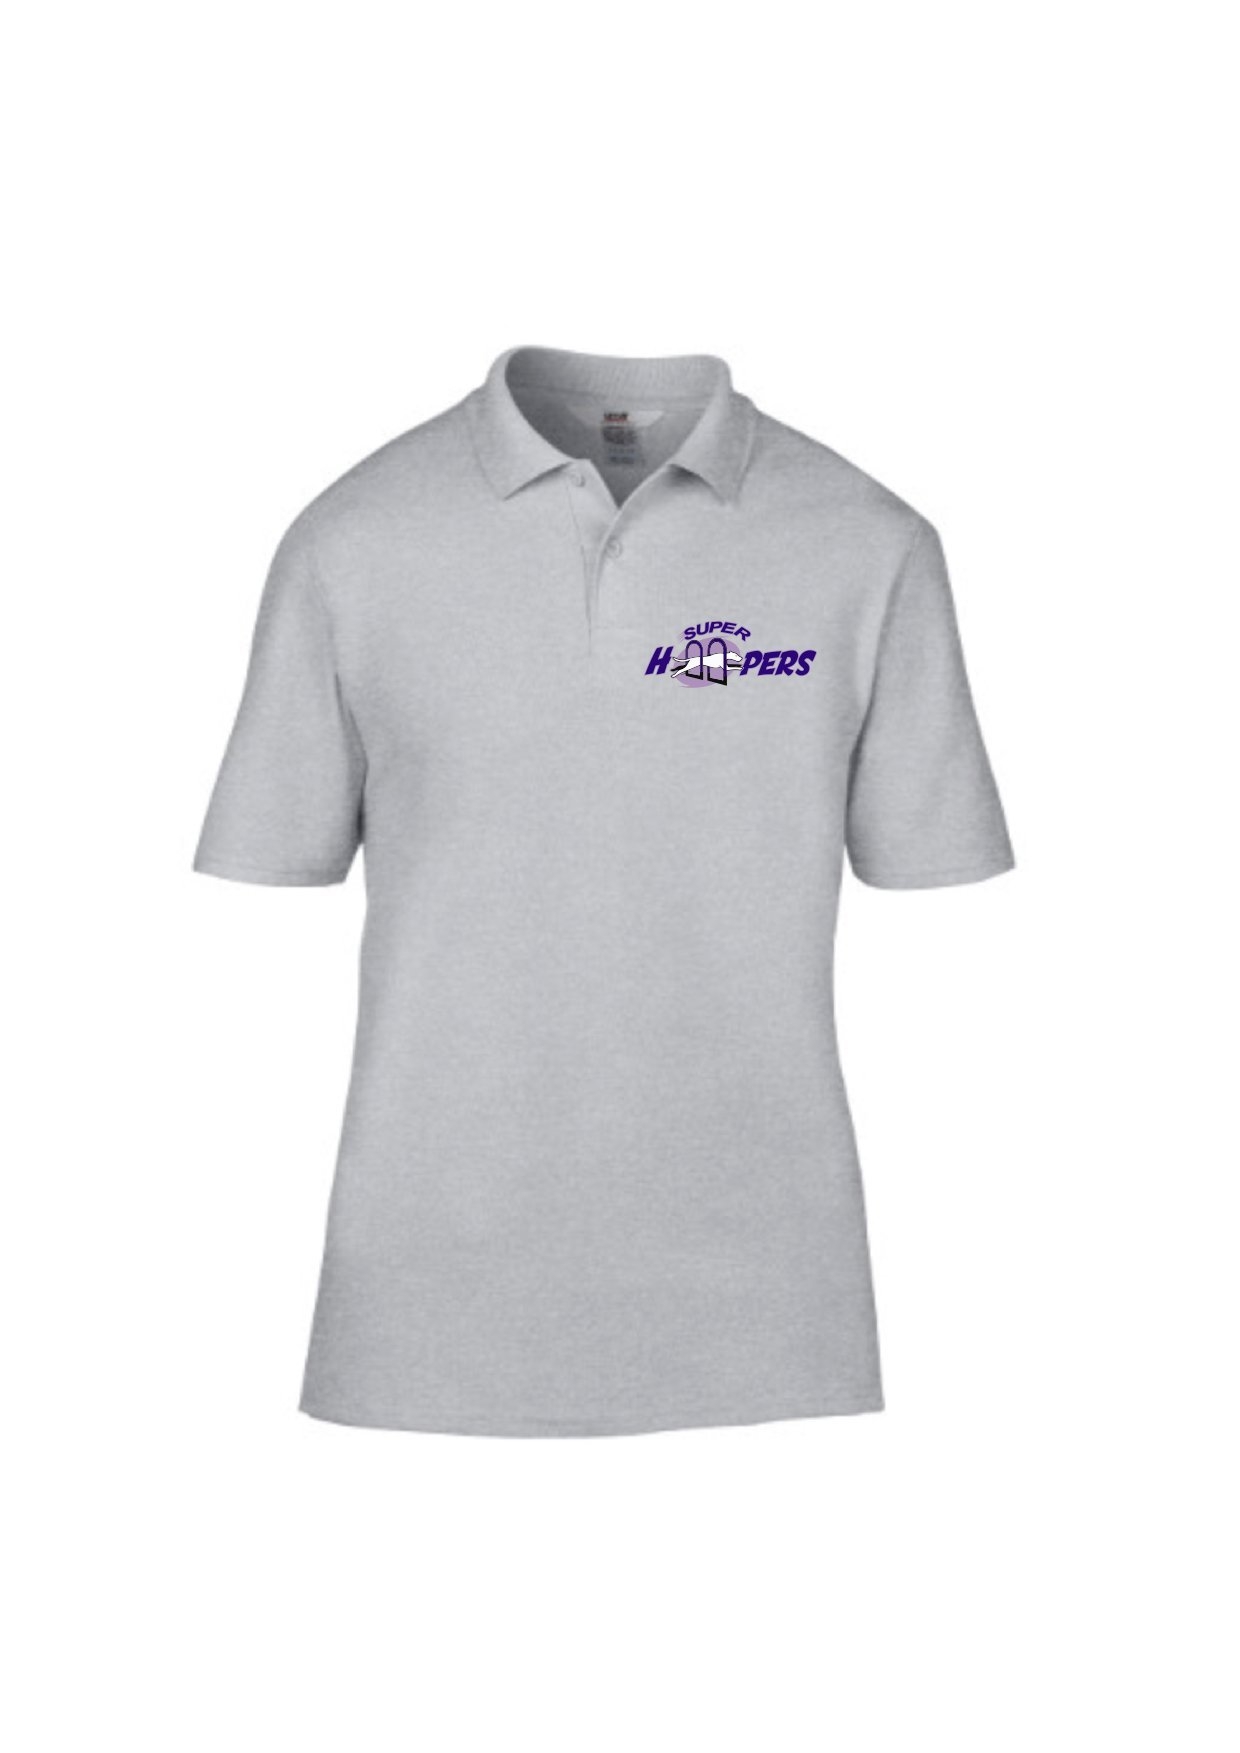 Super Hoopers Polo shirt 3XL – Grey – Pooch